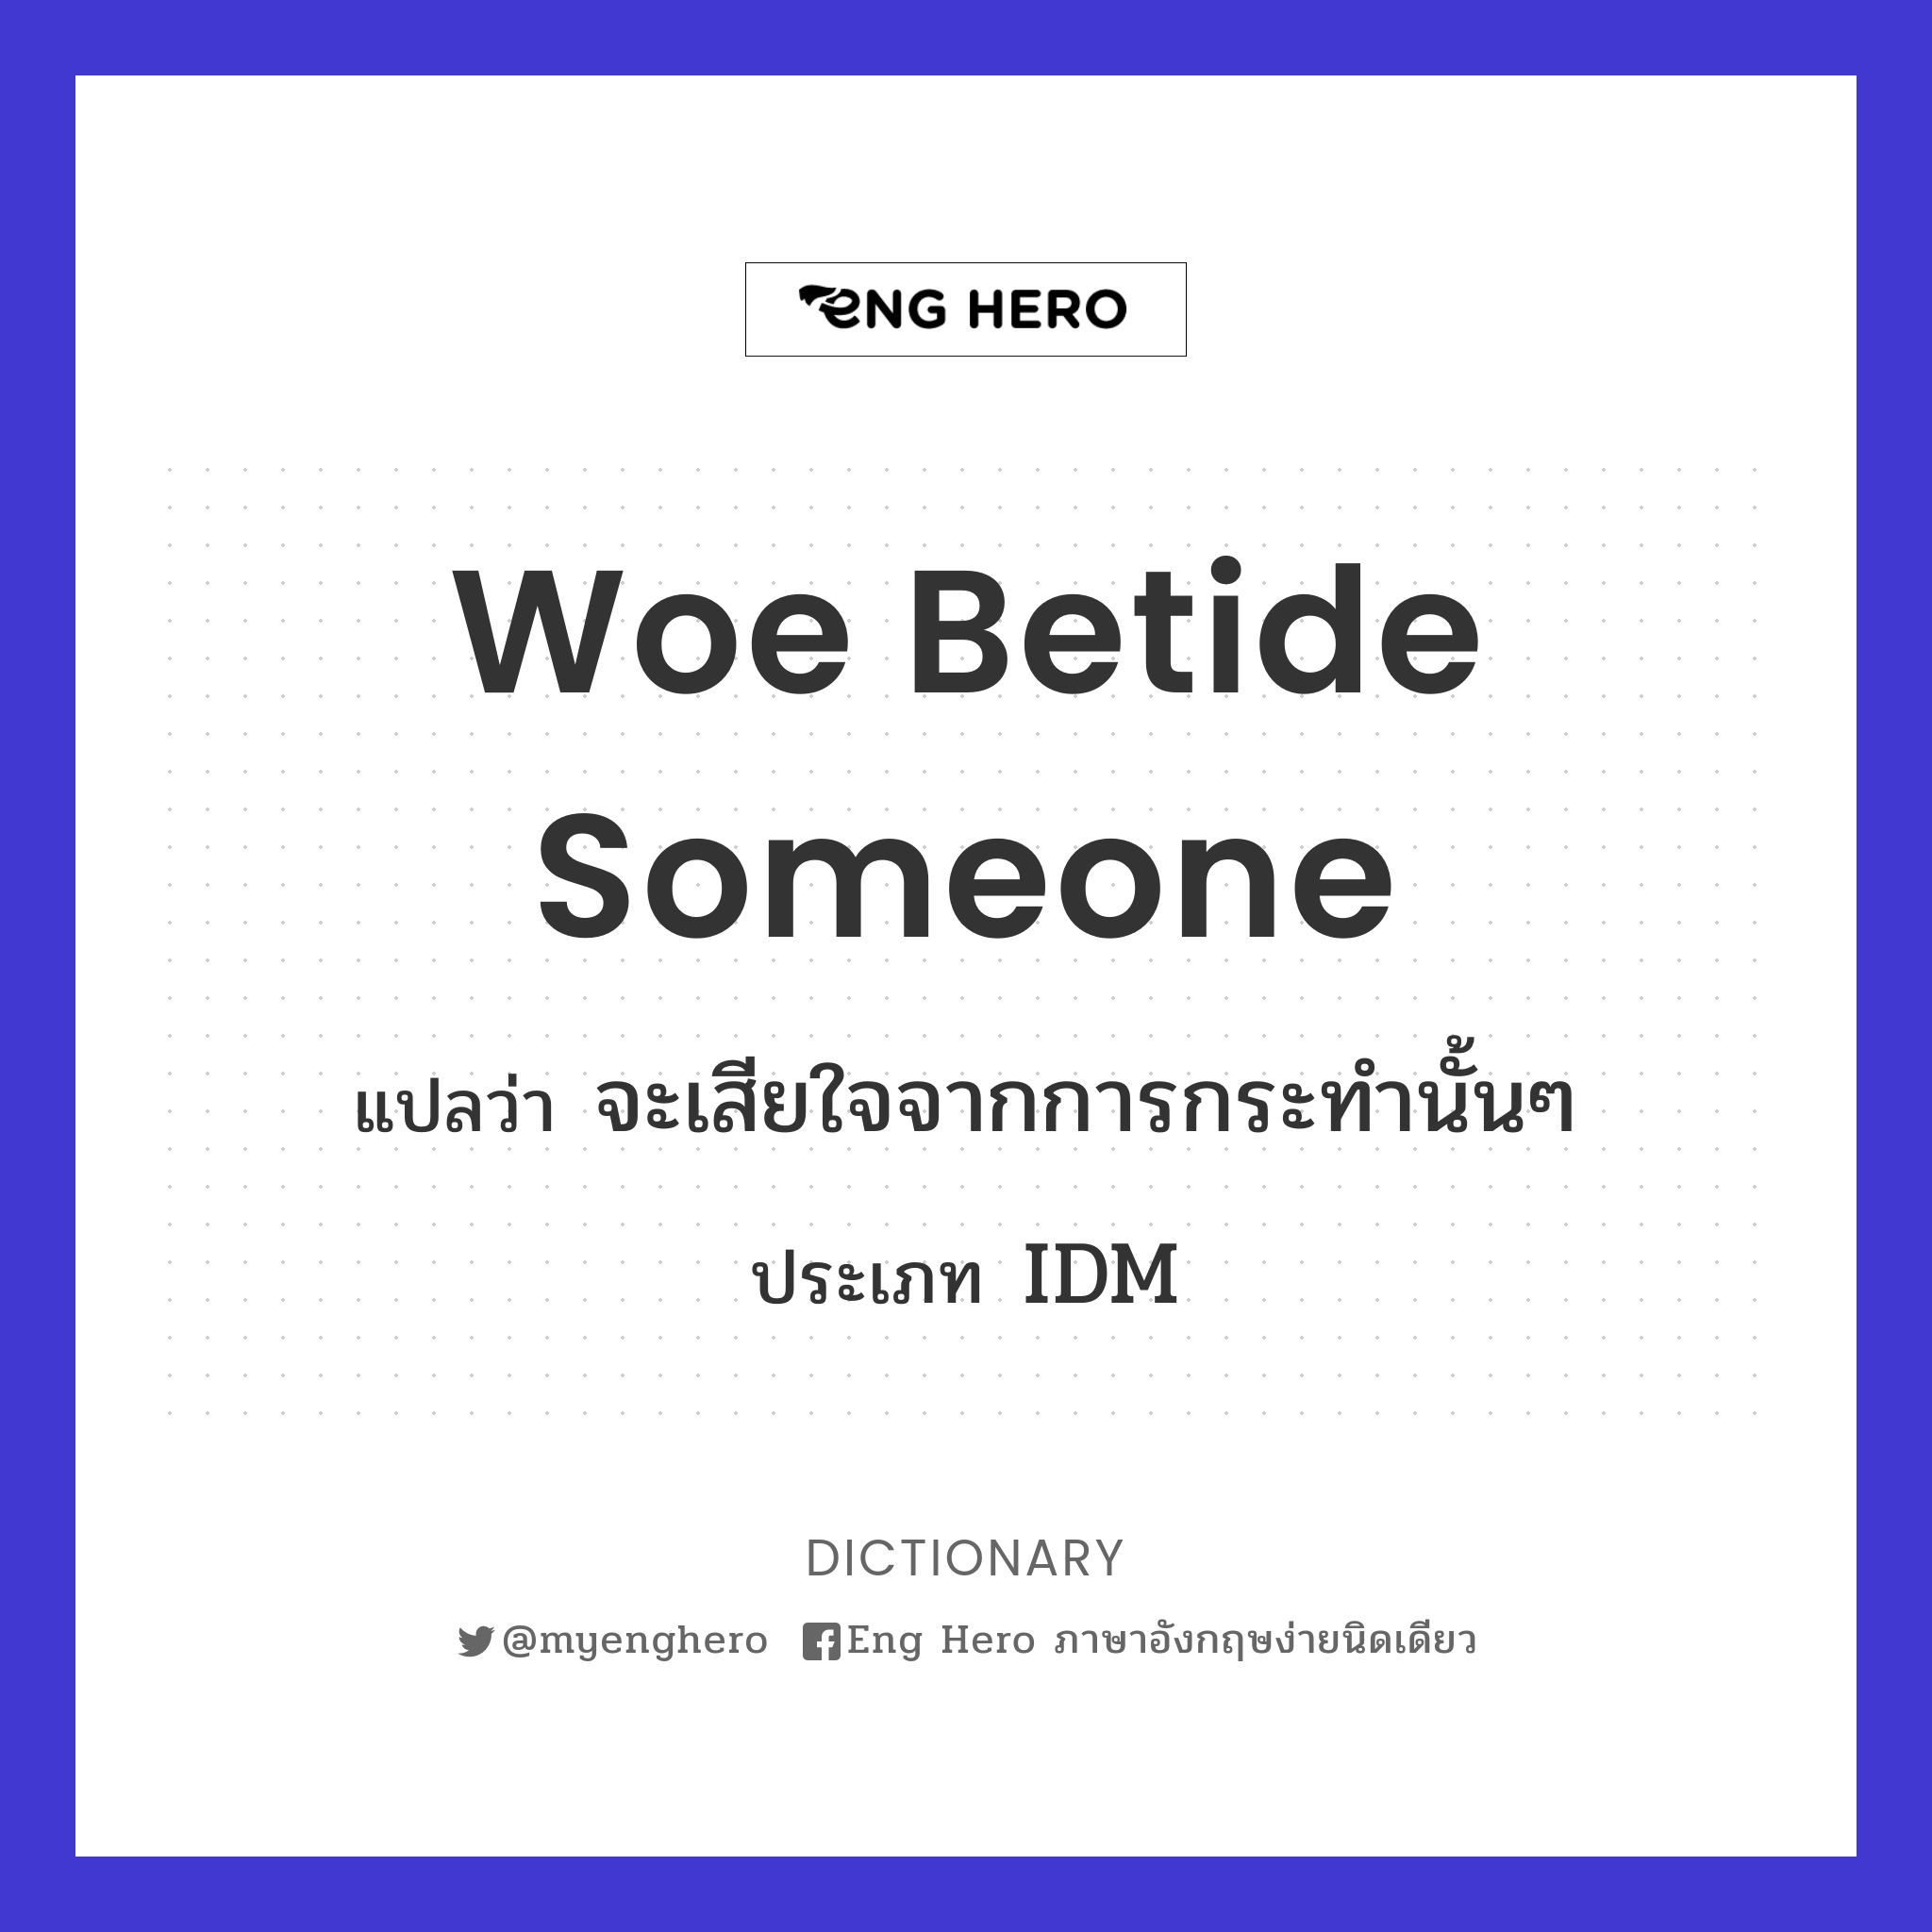 woe betide someone